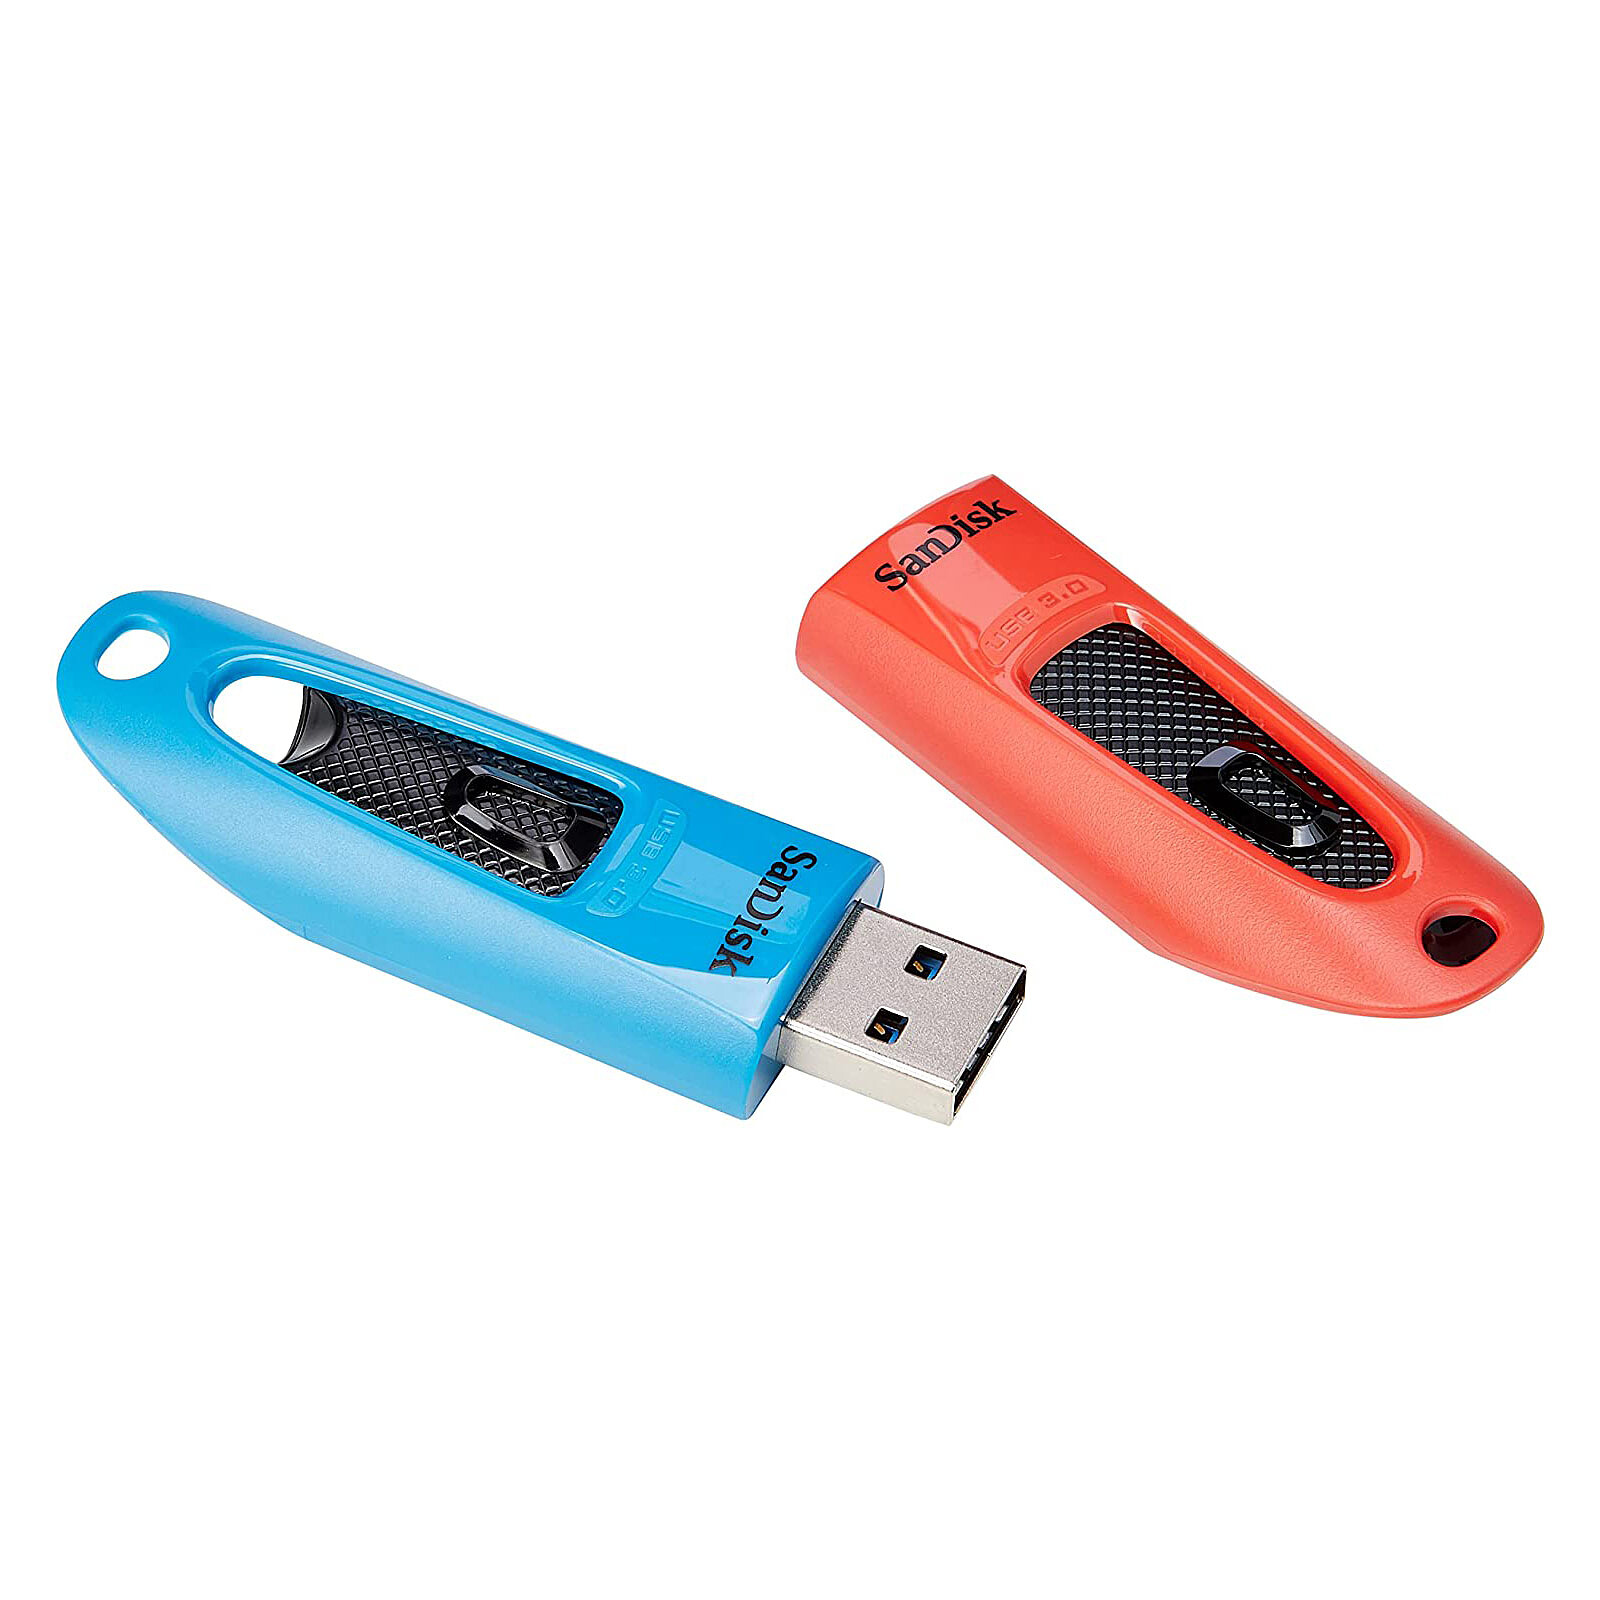 SanDisk Ultra USB 3.0 64GB Blue/Red (2-Pack) - USB flash drive